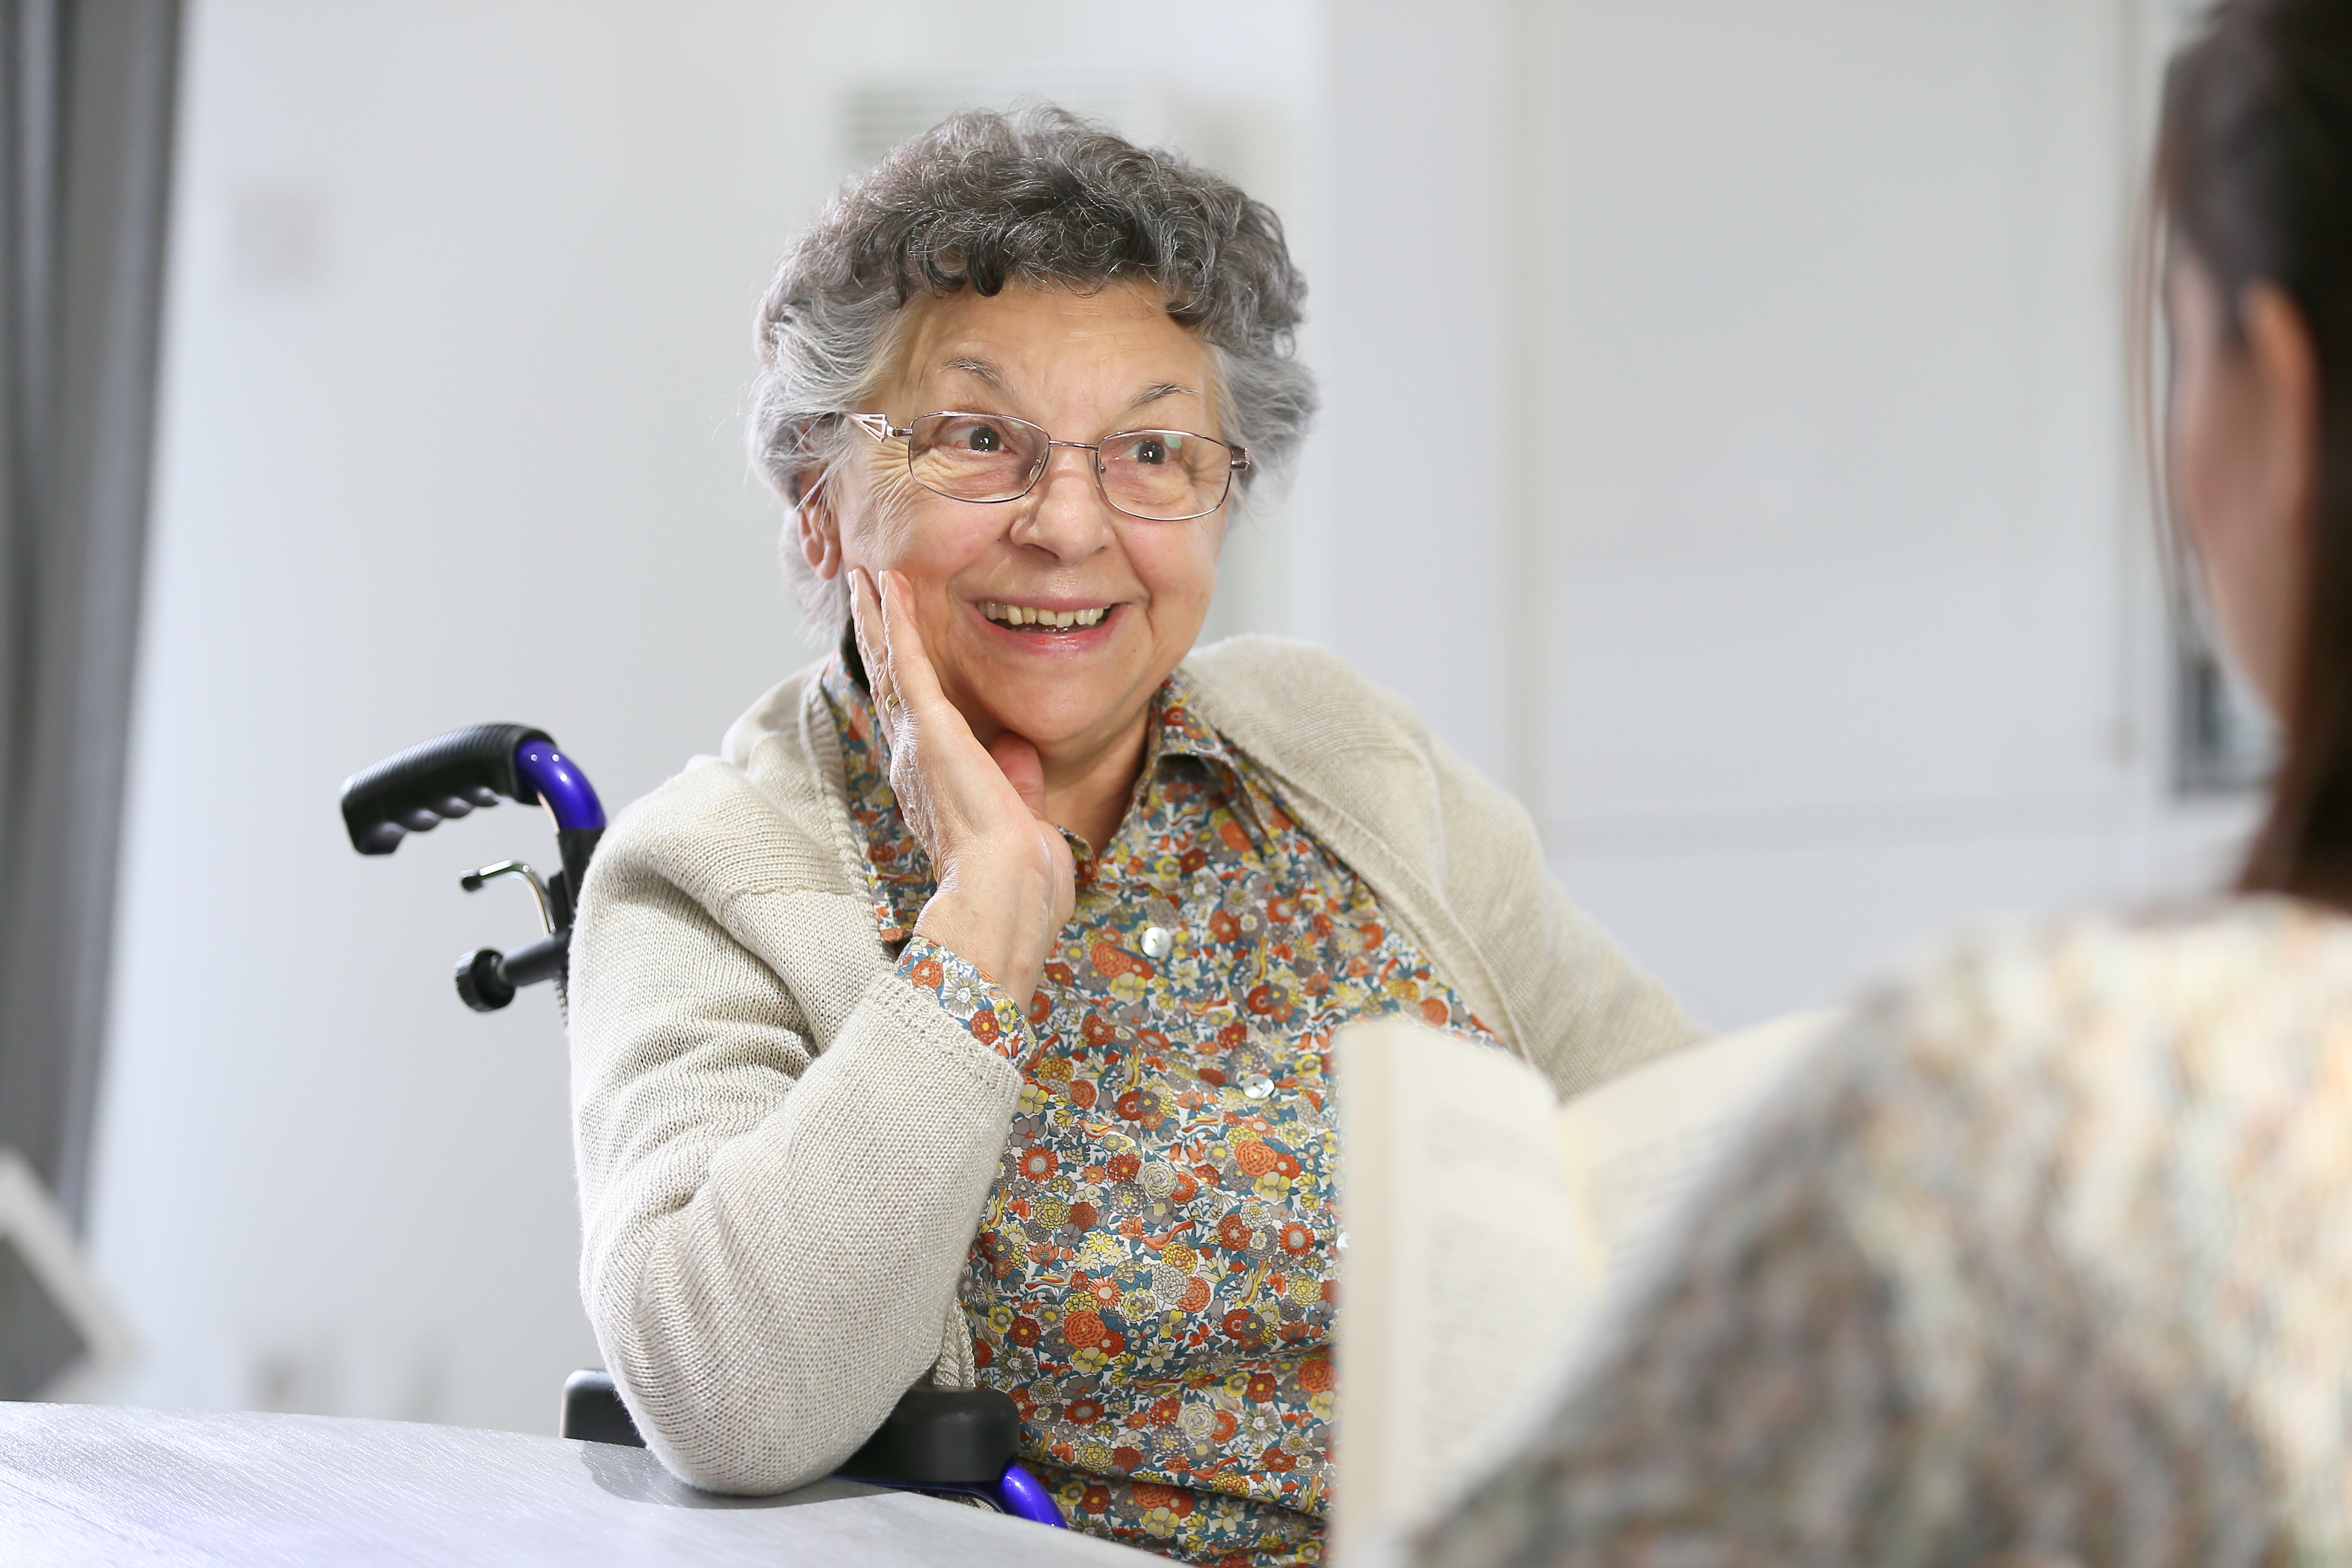 Elderly woman in wheelchair smiling